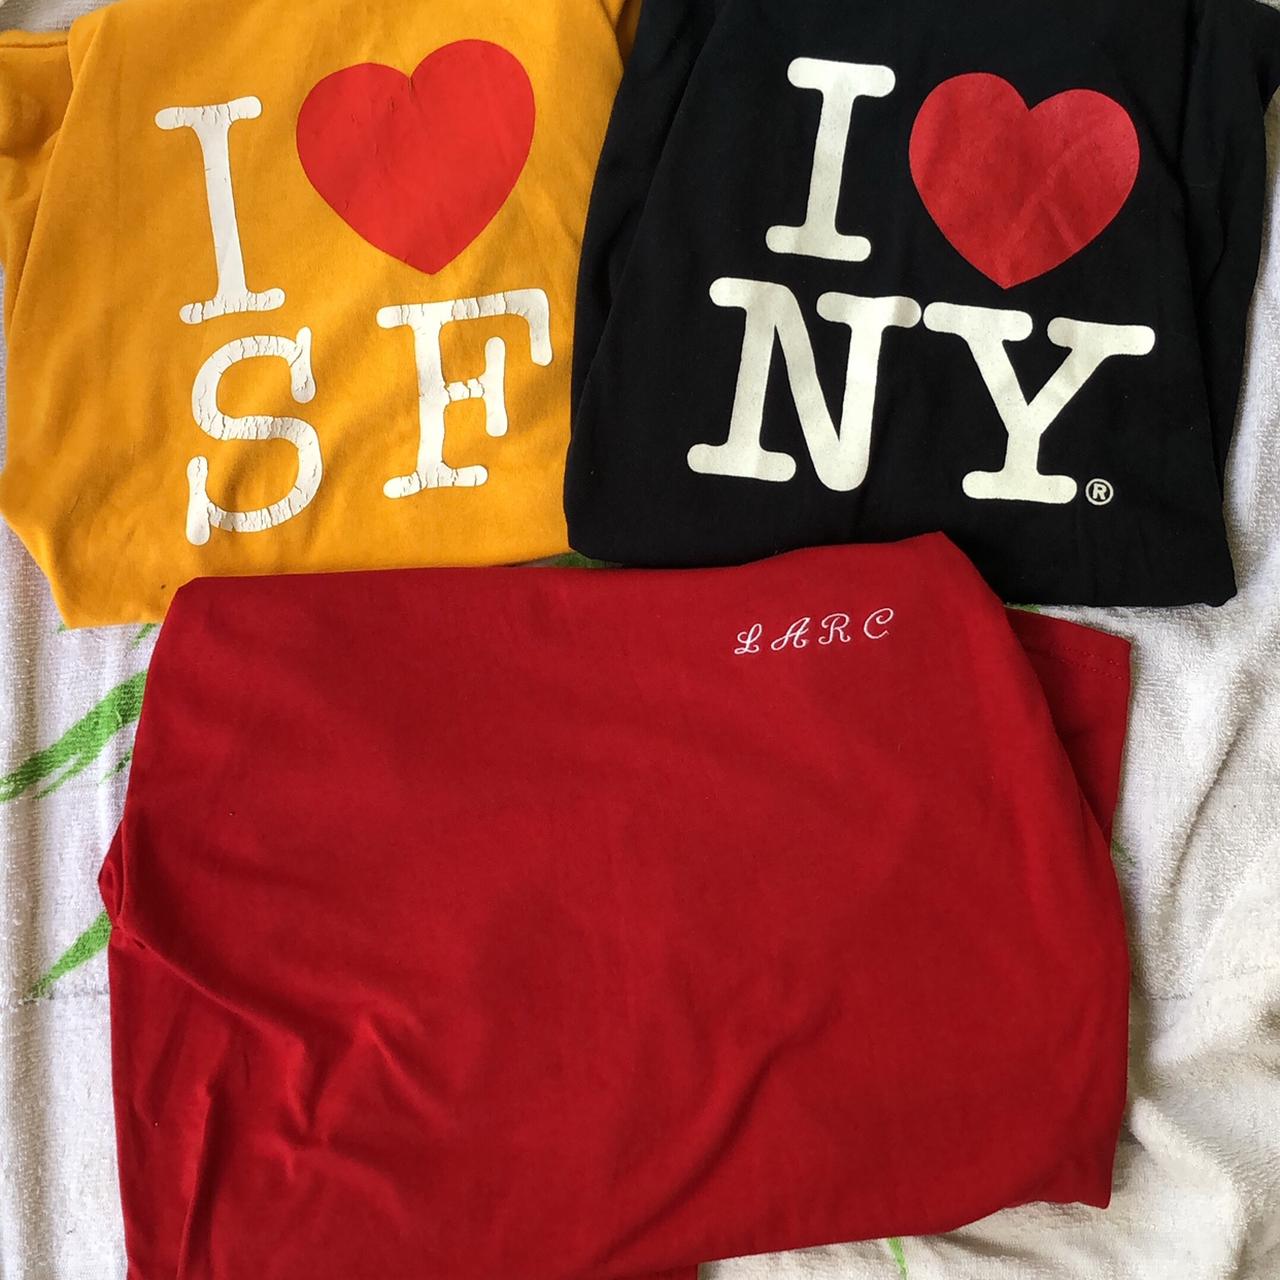 New York Filthy Men's T-shirt